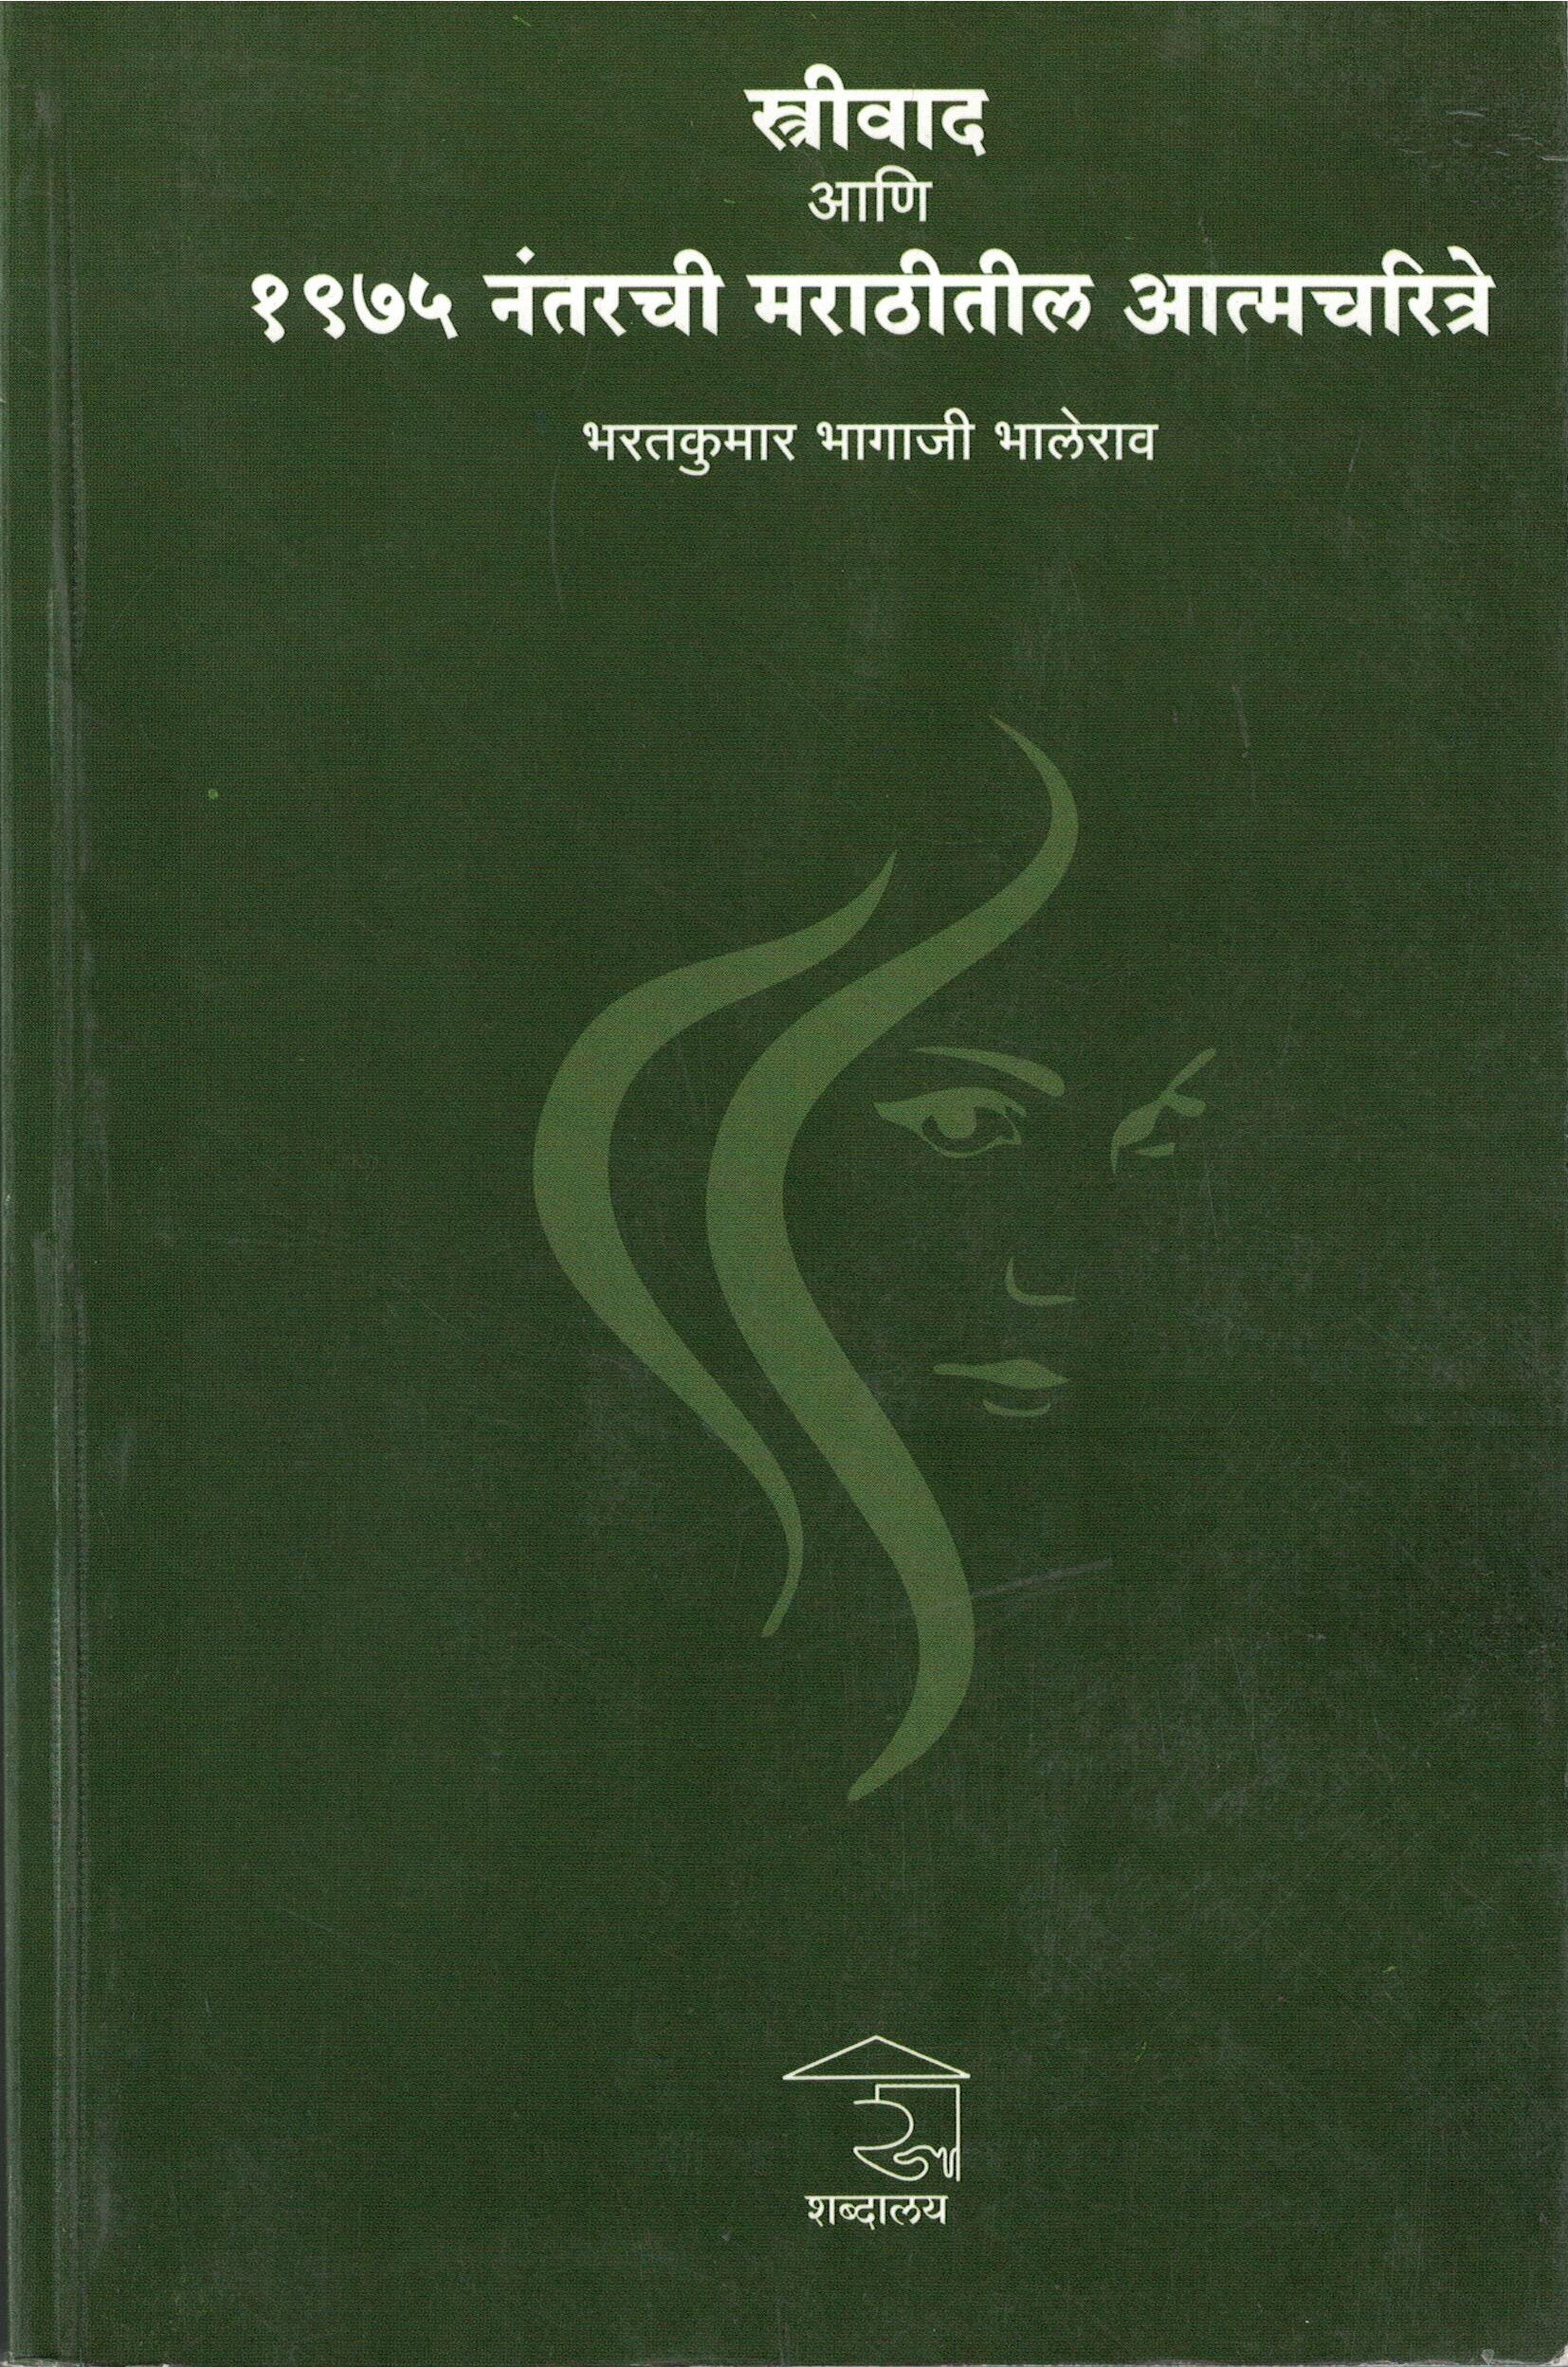 Strivad Aani 1975 Nantarche Marathitil Atmacharitra